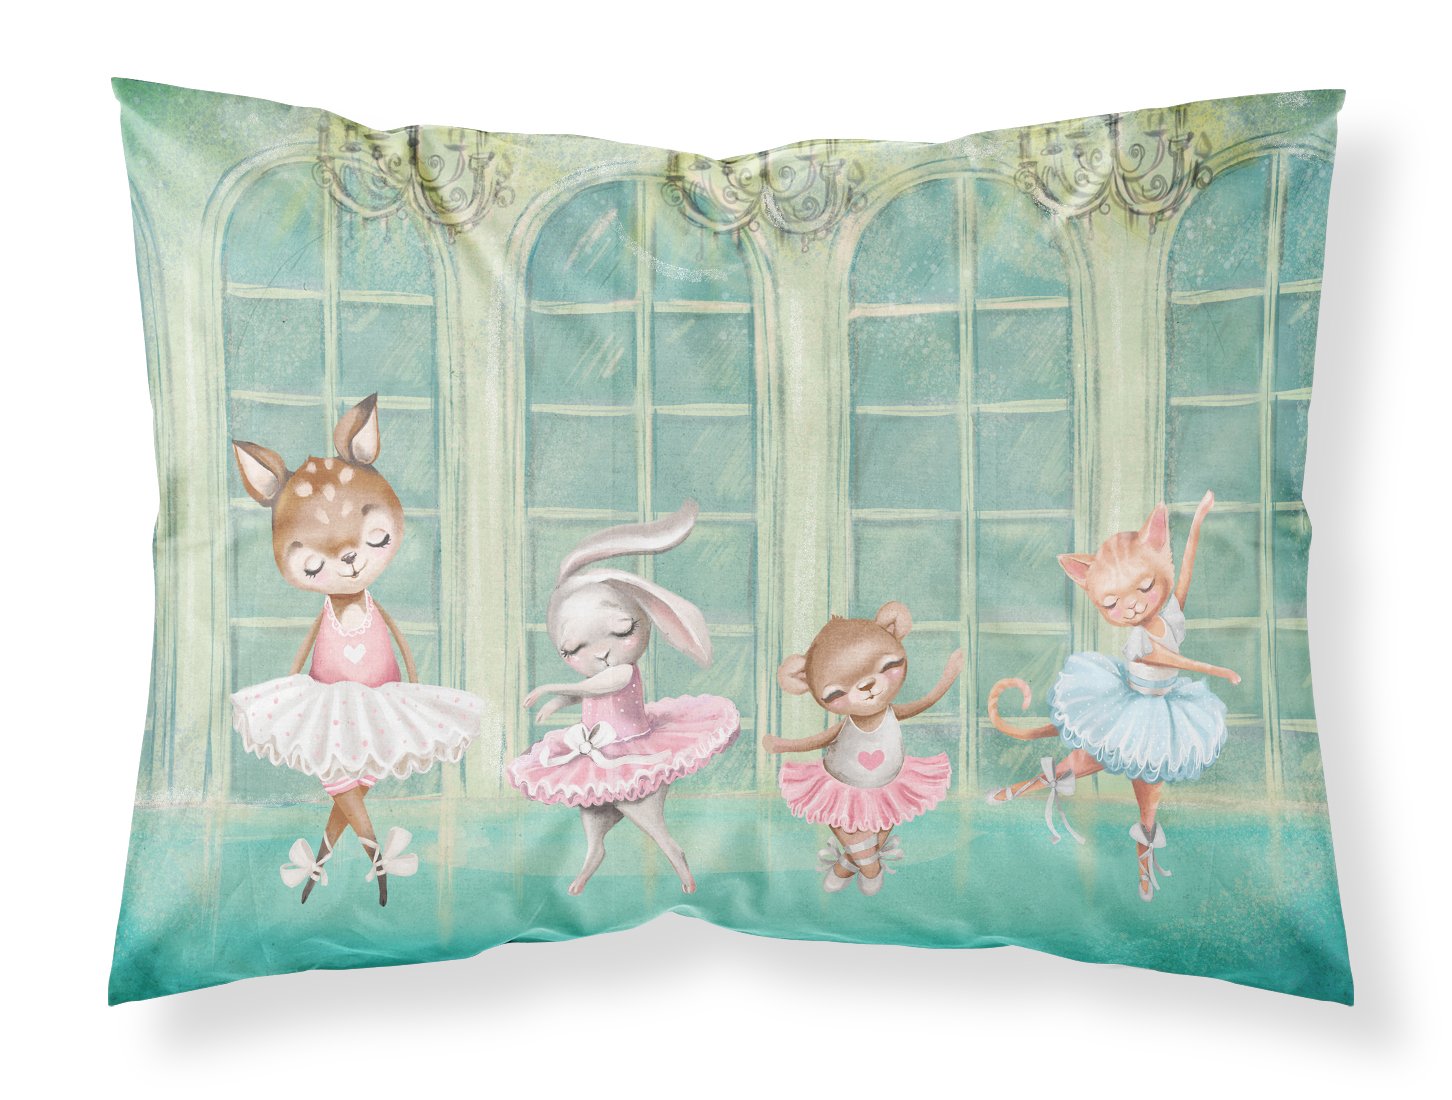 Buy this Animal Ballerinas Dancing Fabric Standard Pillowcase